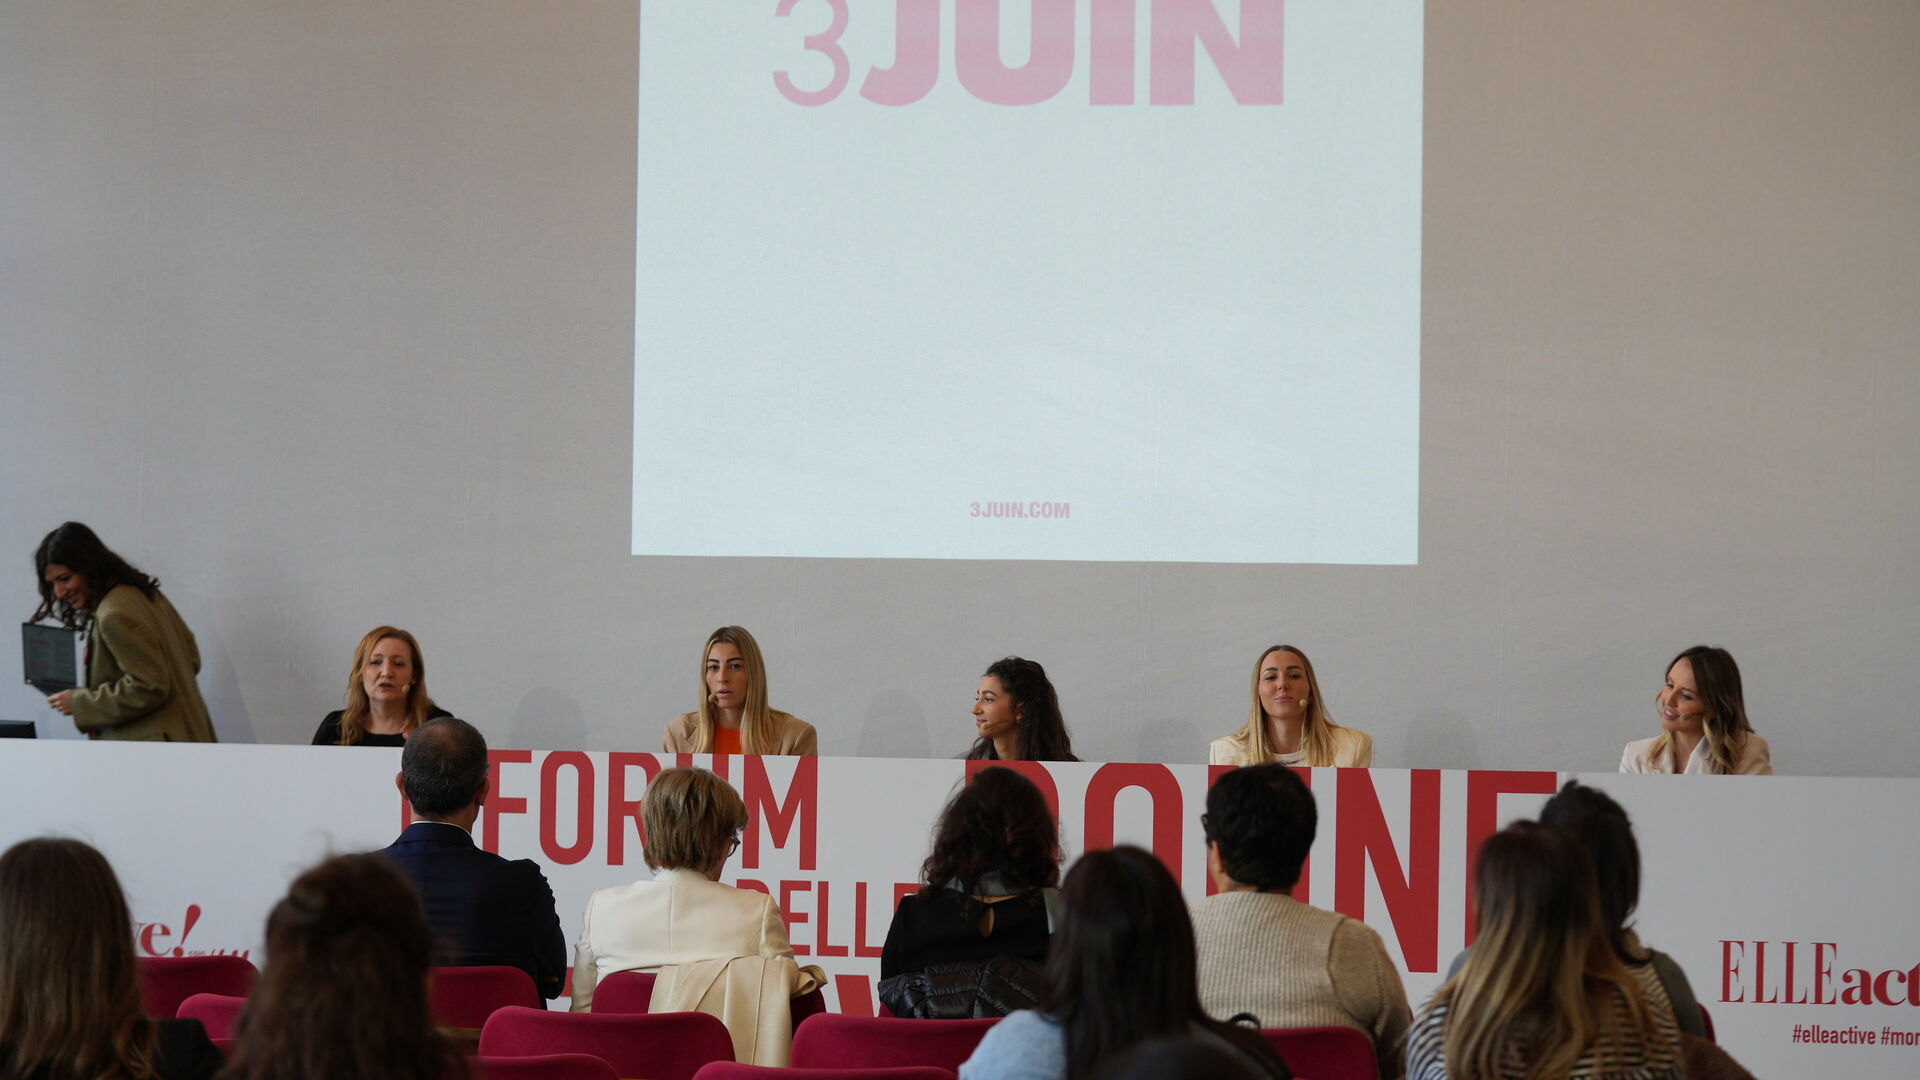 3JUIN-dən Perla, Antonia və Margherita Alessandri, Hearst Digital-in baş direktoru Simona Zanette ilə "Elle active!"